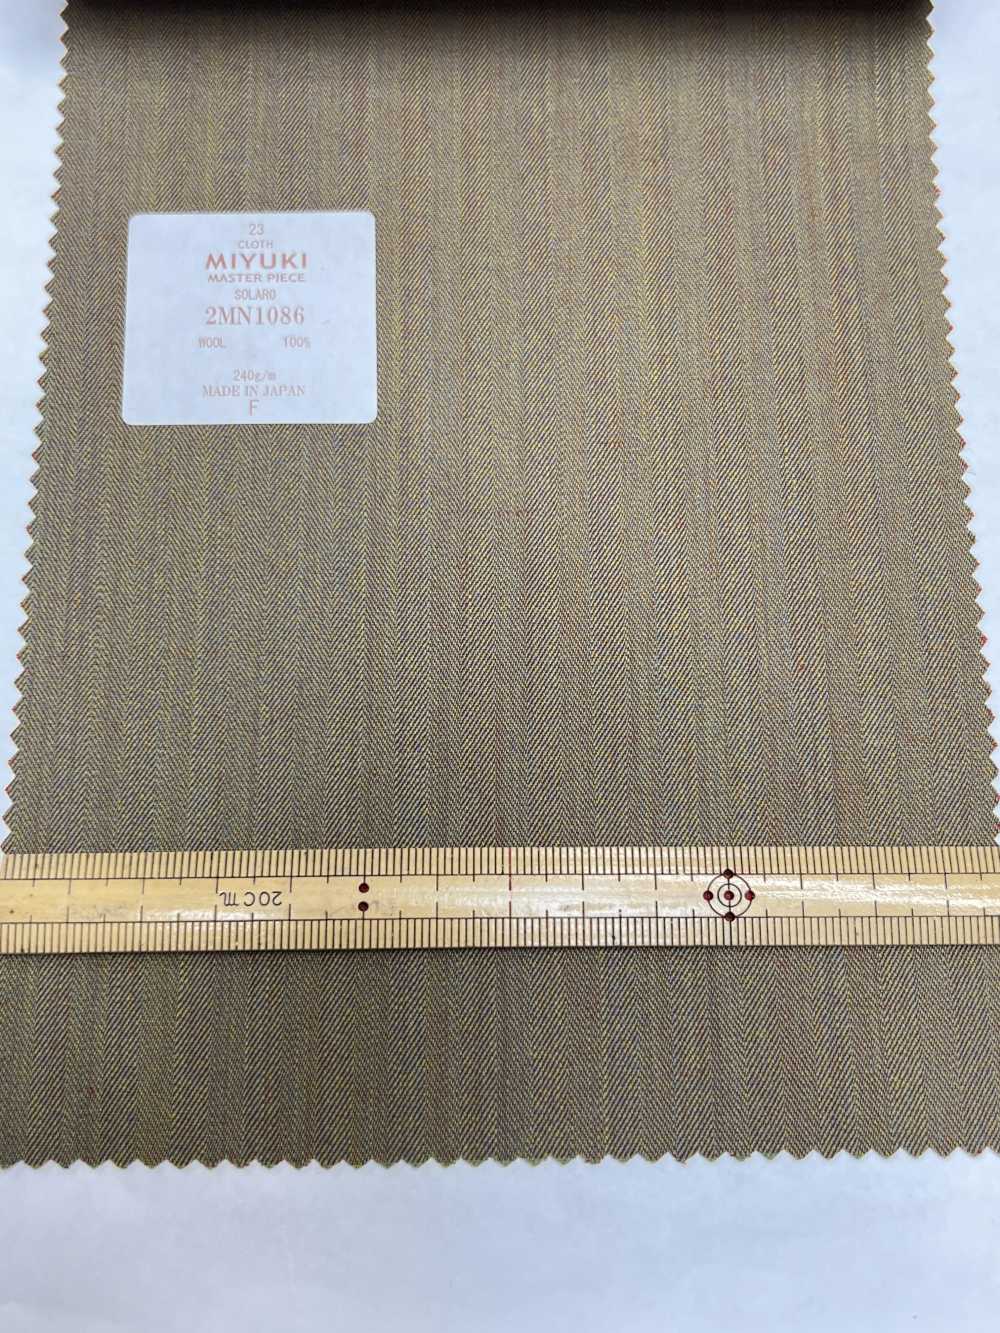 2MN1086 KREATIVLINIE SOLARO[Textil] Miyuki-Keori (Miyuki)